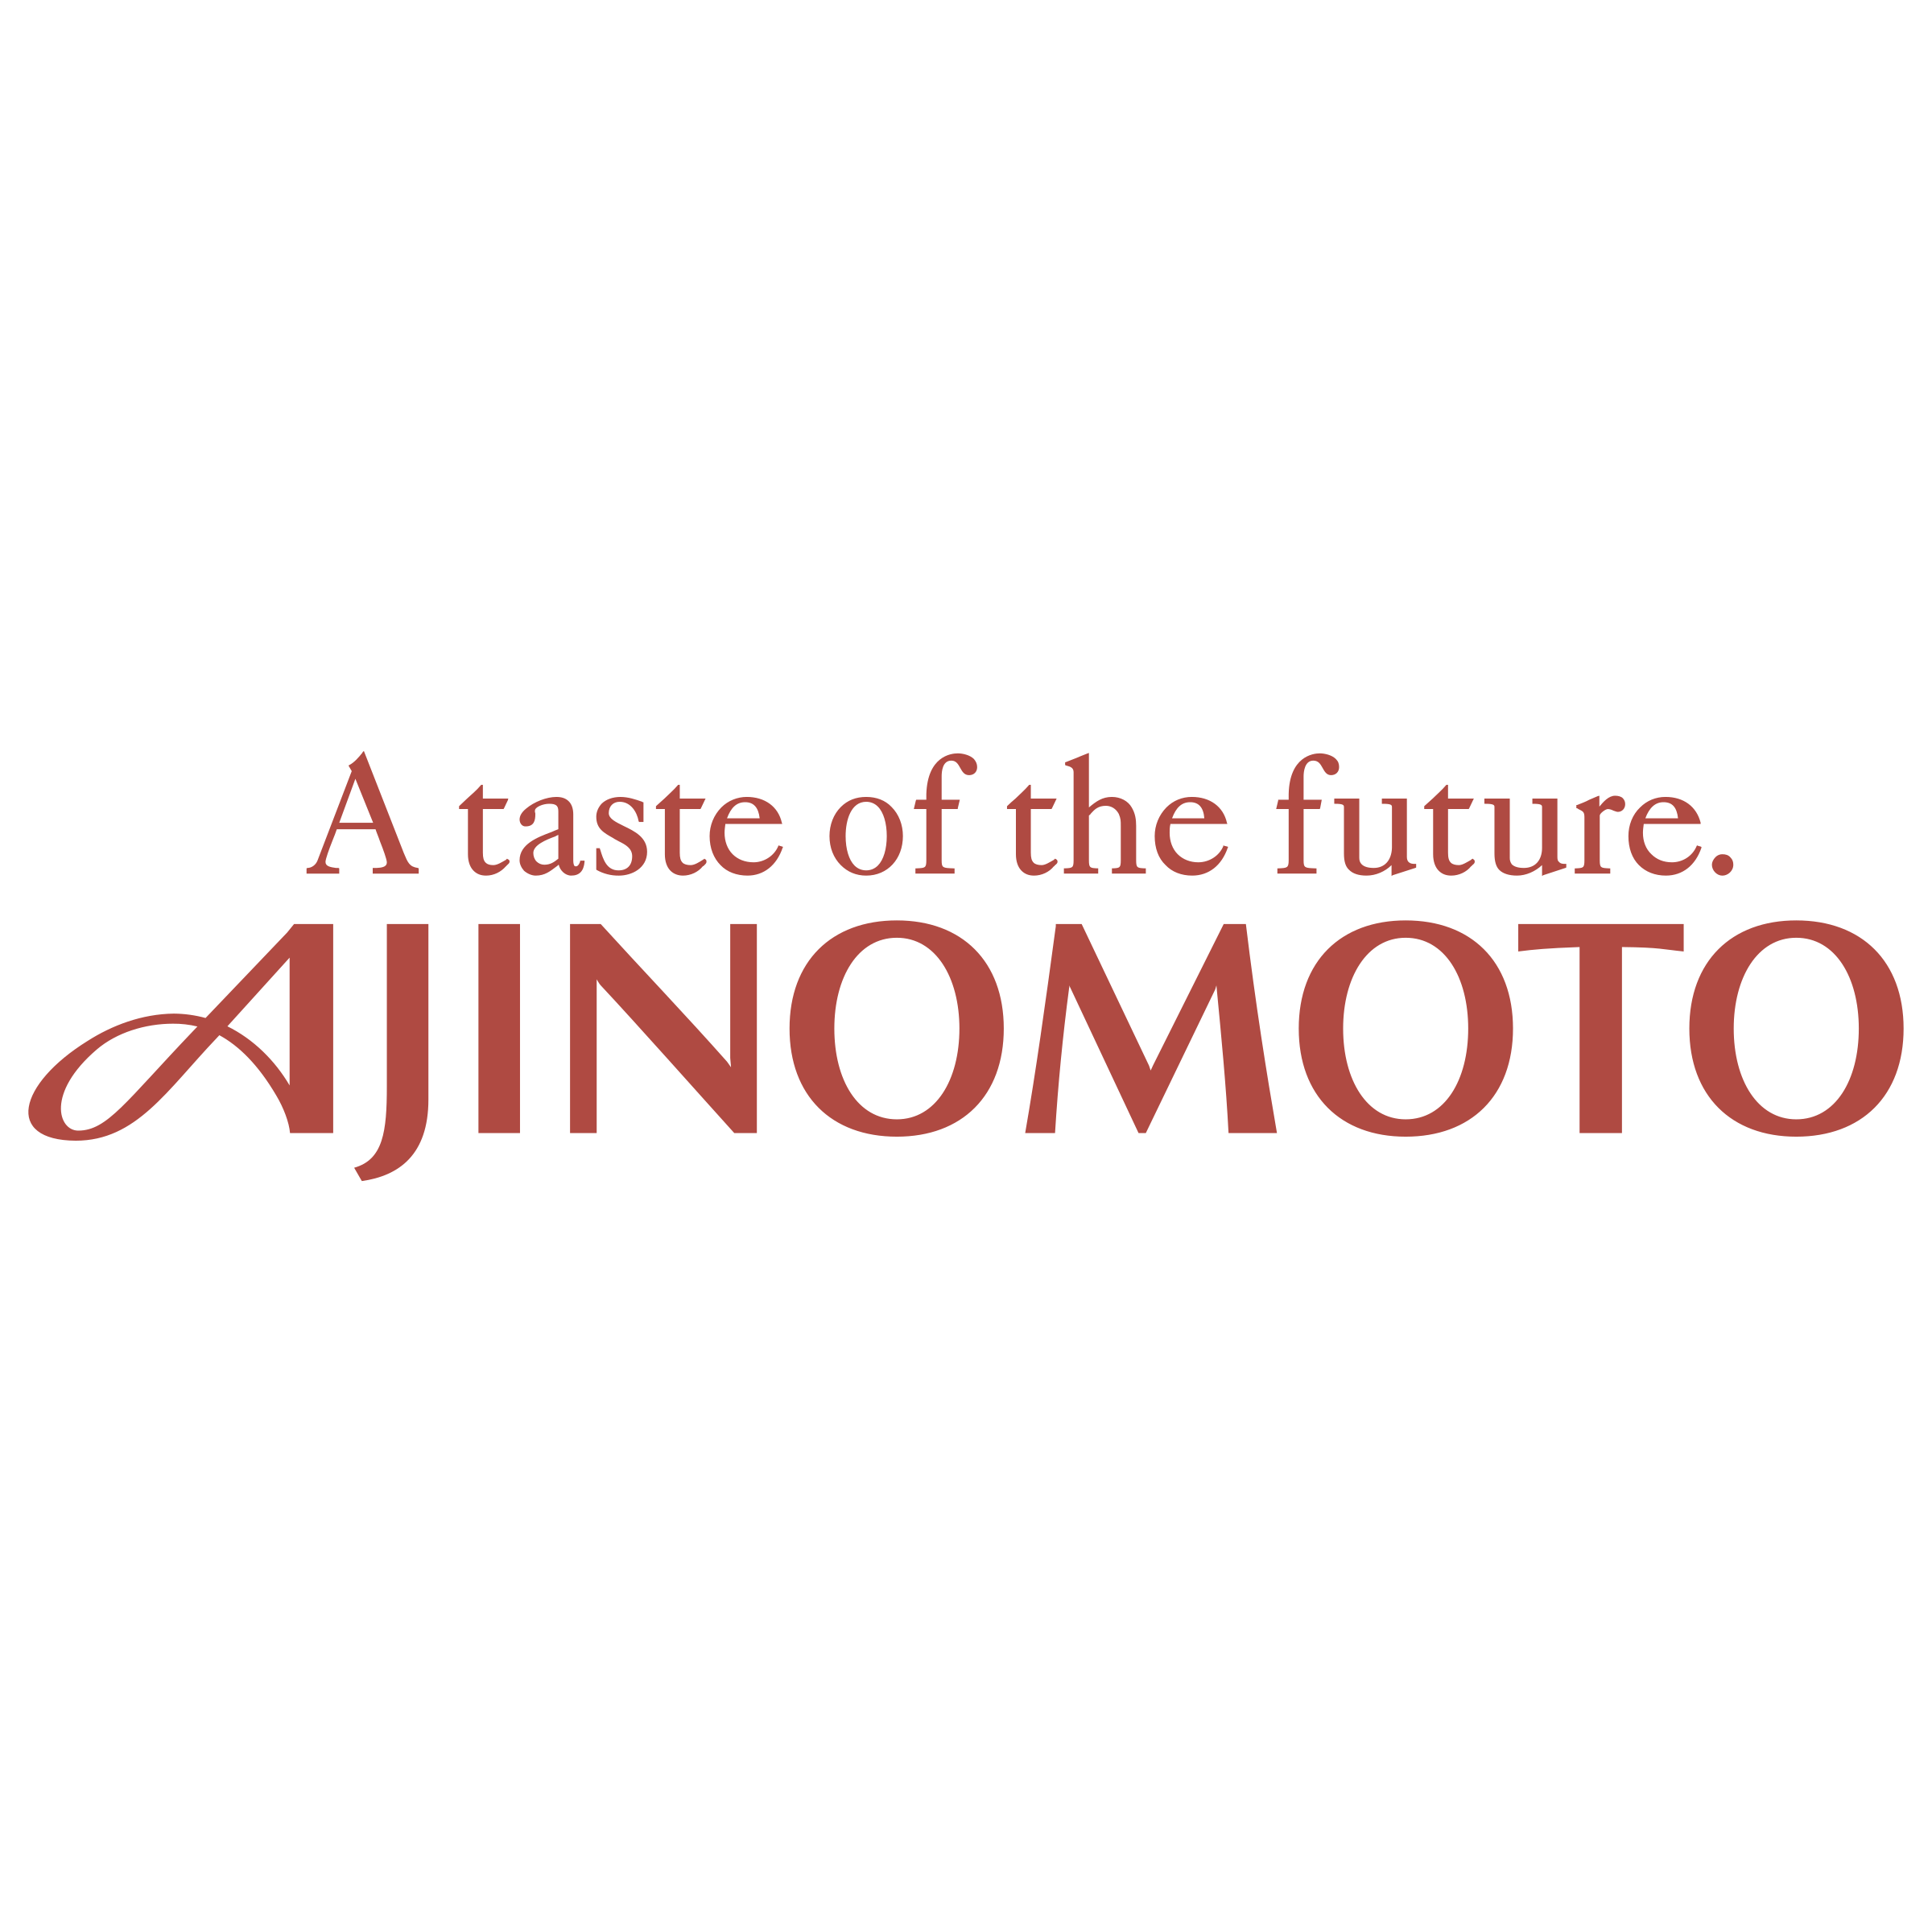 Ajinomoto Logo - Ajinomoto Logo PNG Transparent & SVG Vector - Freebie Supply